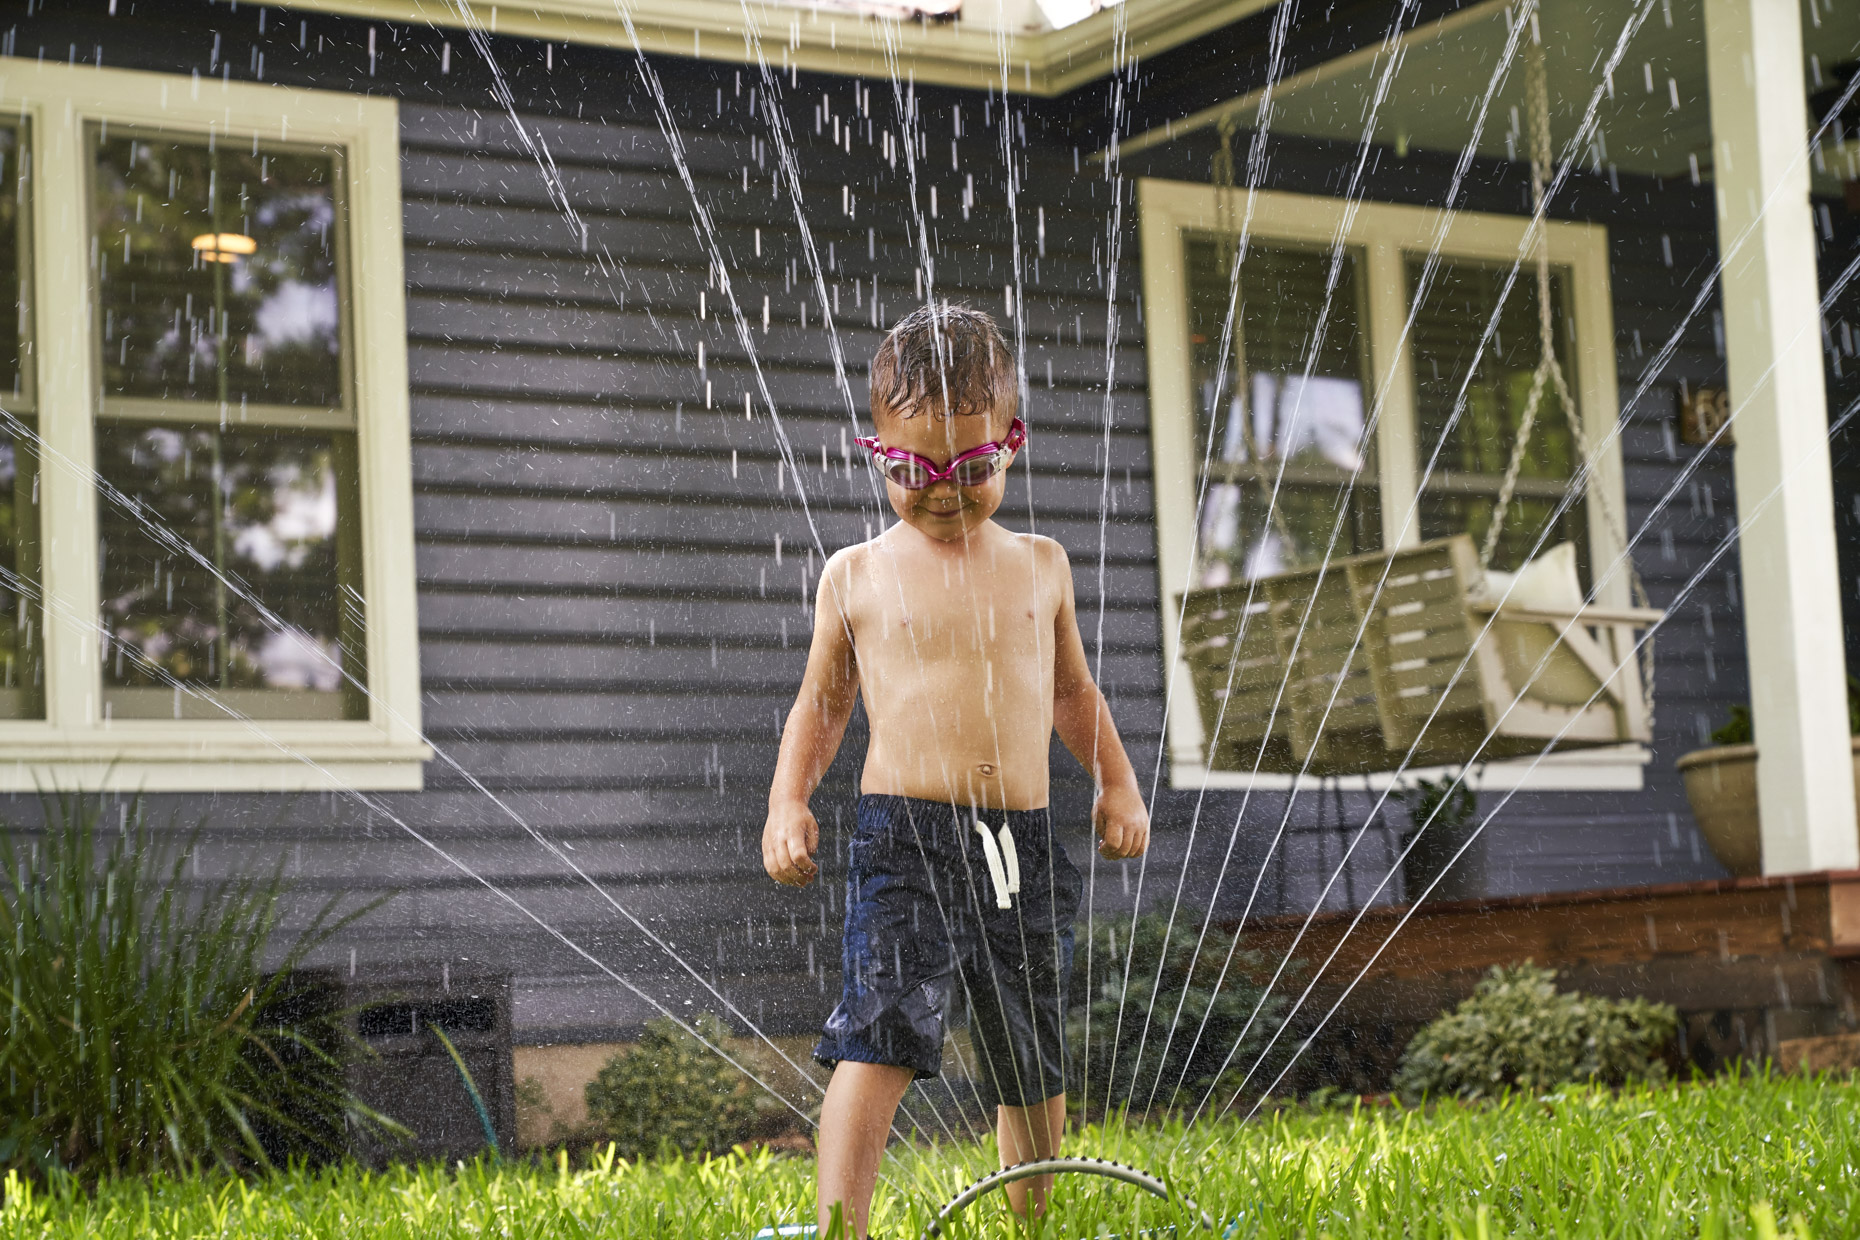 Boy in swim goggles playing in sprinkler in front yard